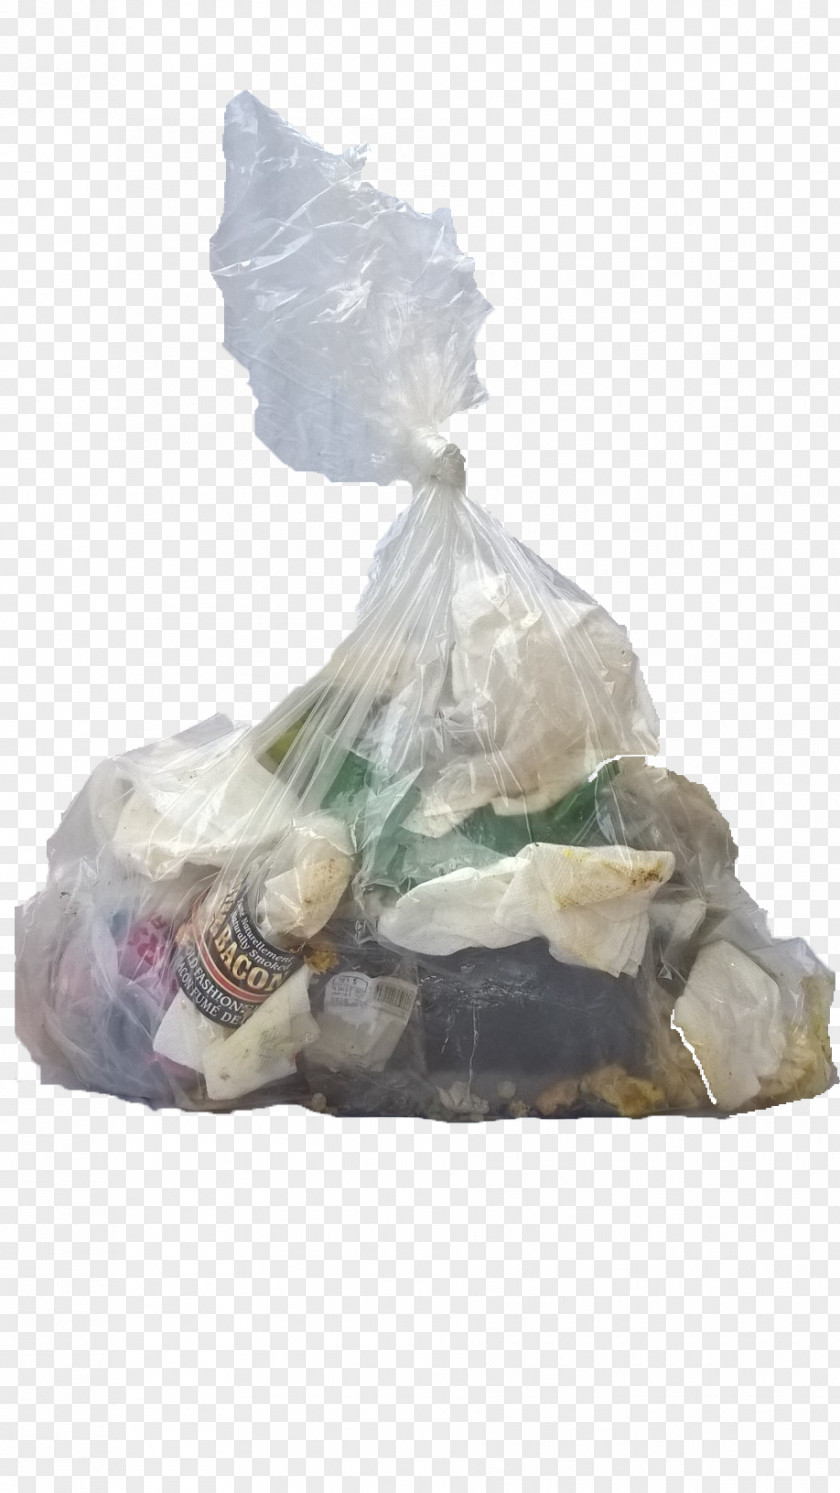 Garbage Douro-Dummer Bin Bag Plastic Waste PNG